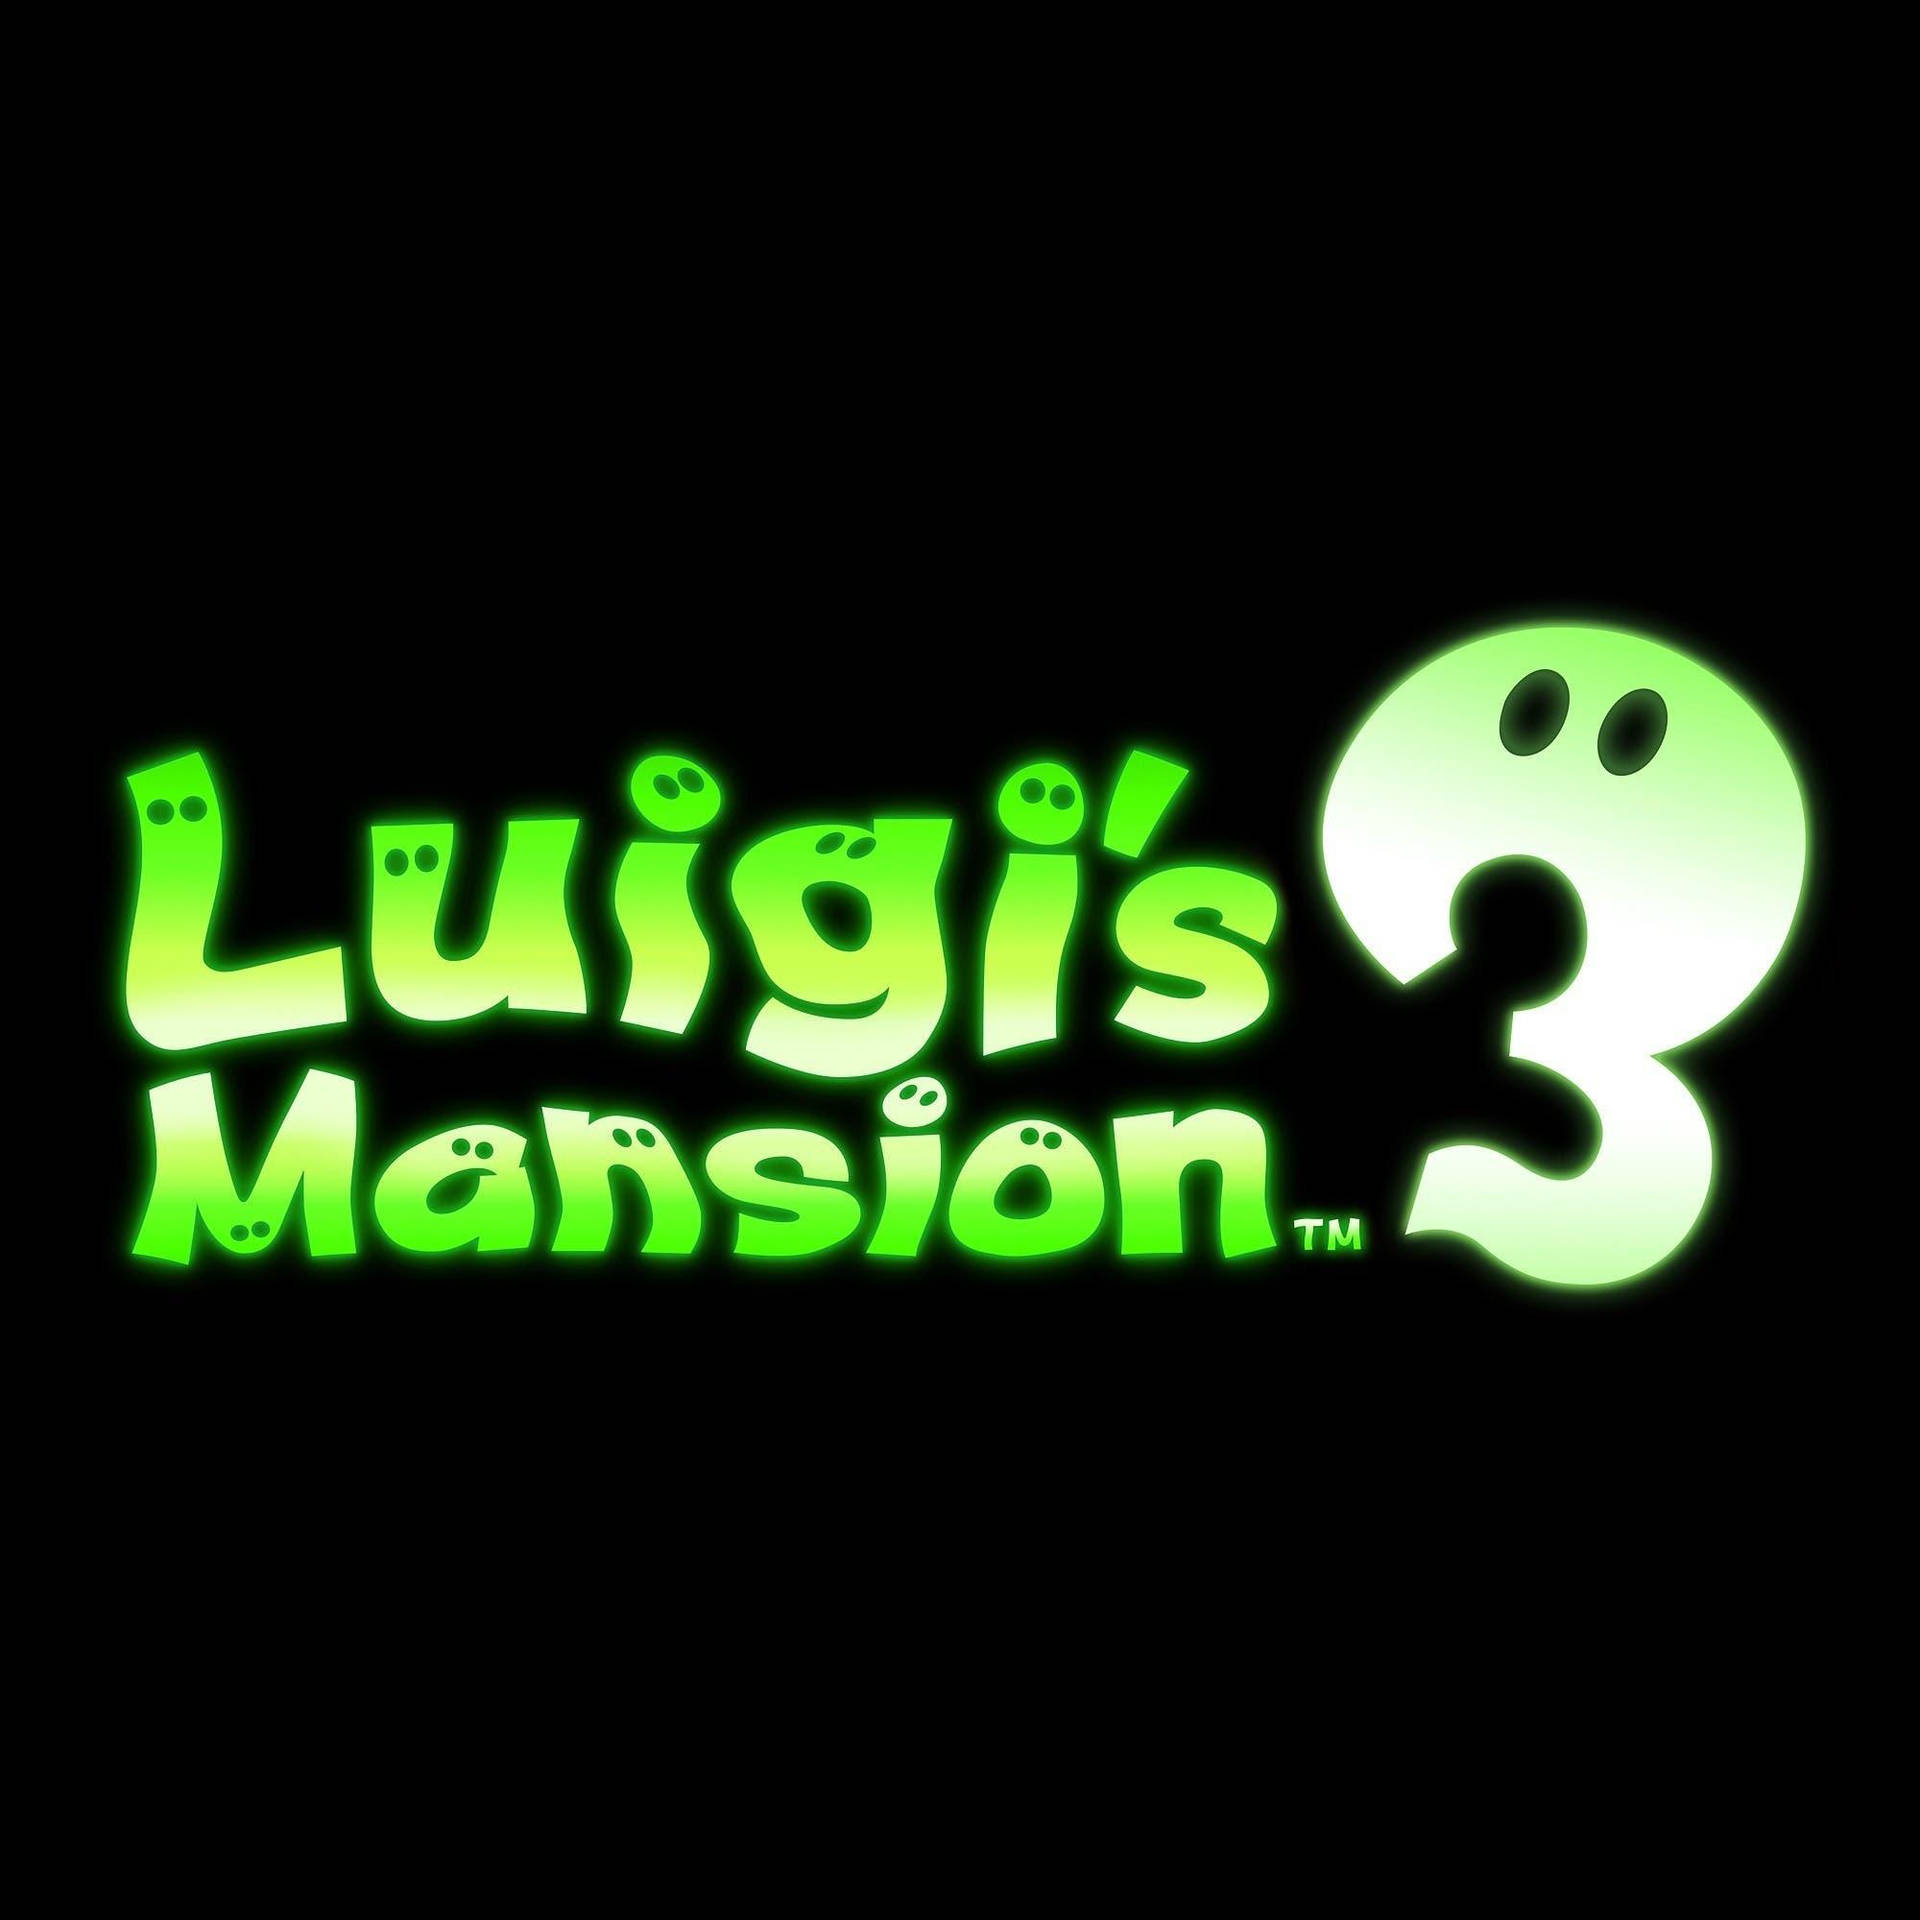 Luigi's Mansion 3 Logo On Black Background